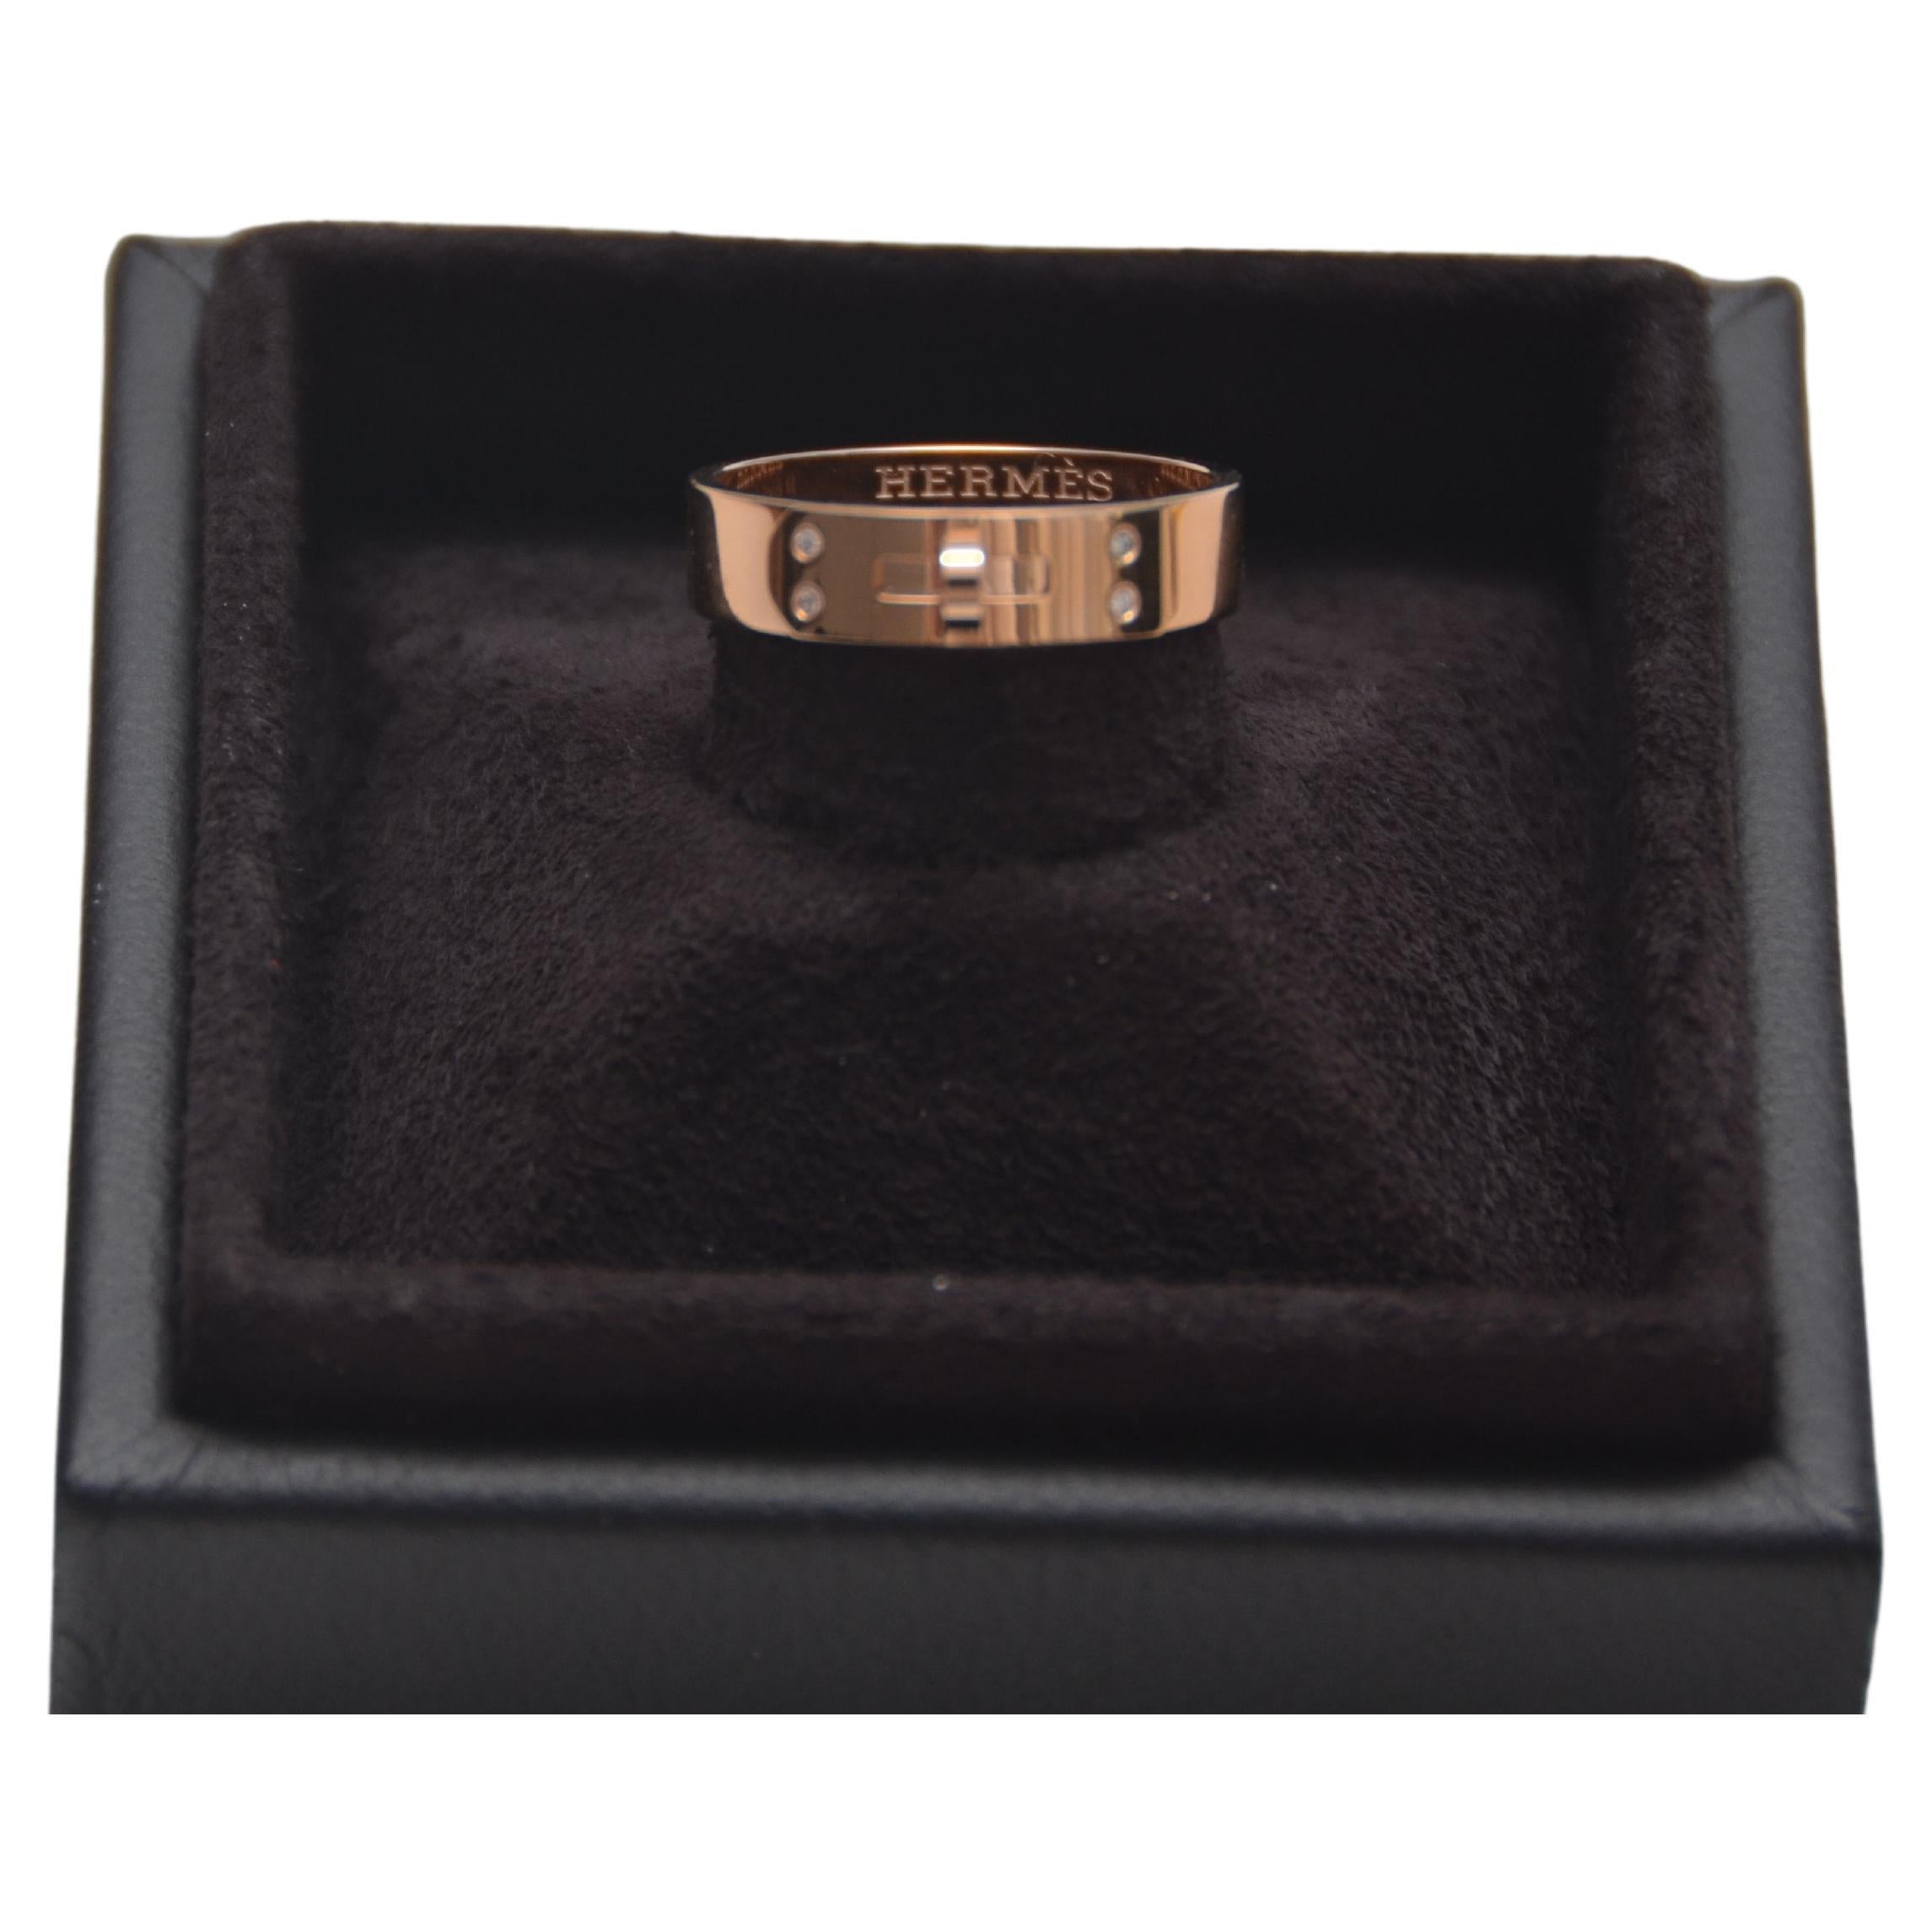 Hermes Kelly Ring Small Model 18K Rose Gold Size 058   NEW